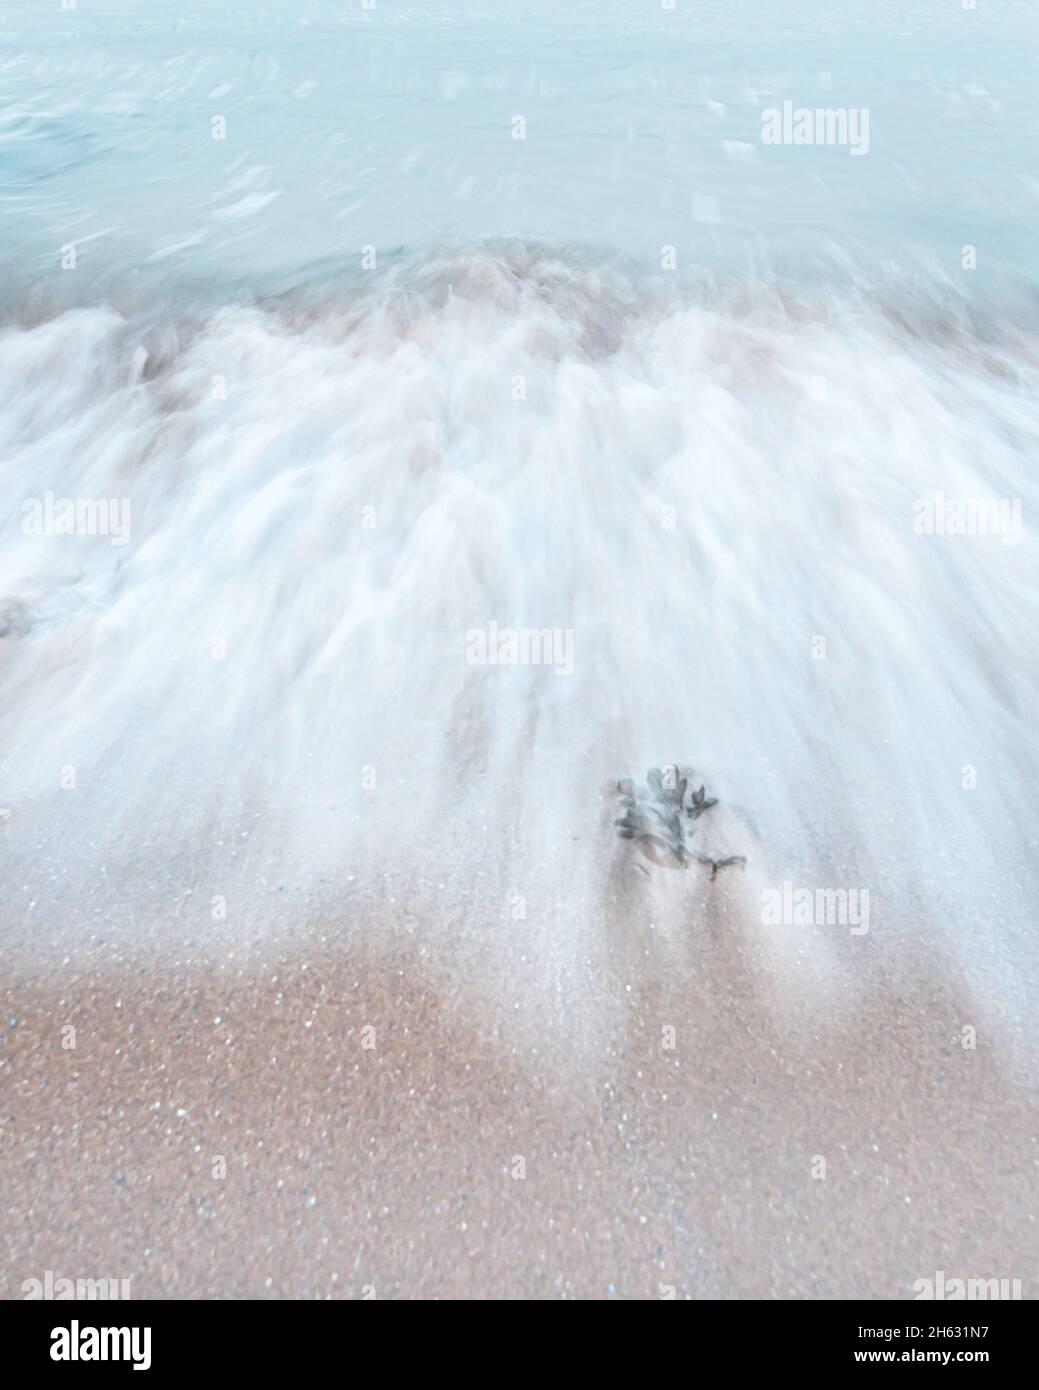 The wave splashing on sandy beach.Minimalist seascape abstract photo. Stock Photo